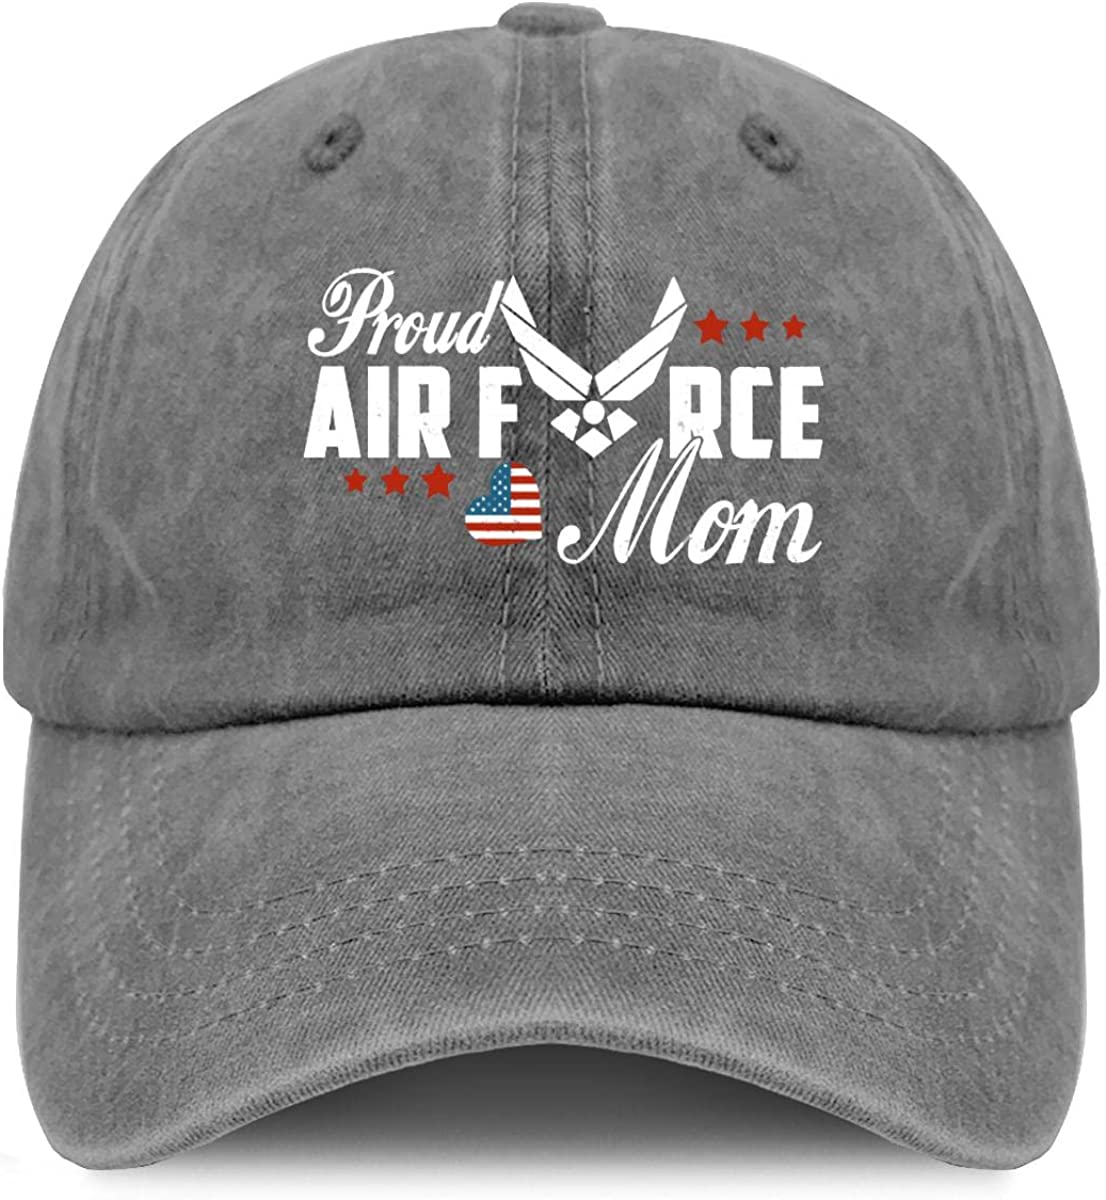 Baseball Cap for Men Fashion Caps Mens Flexfit Proud Mom Air Force Dad Caps Cotton for Fishing Pigment Gray